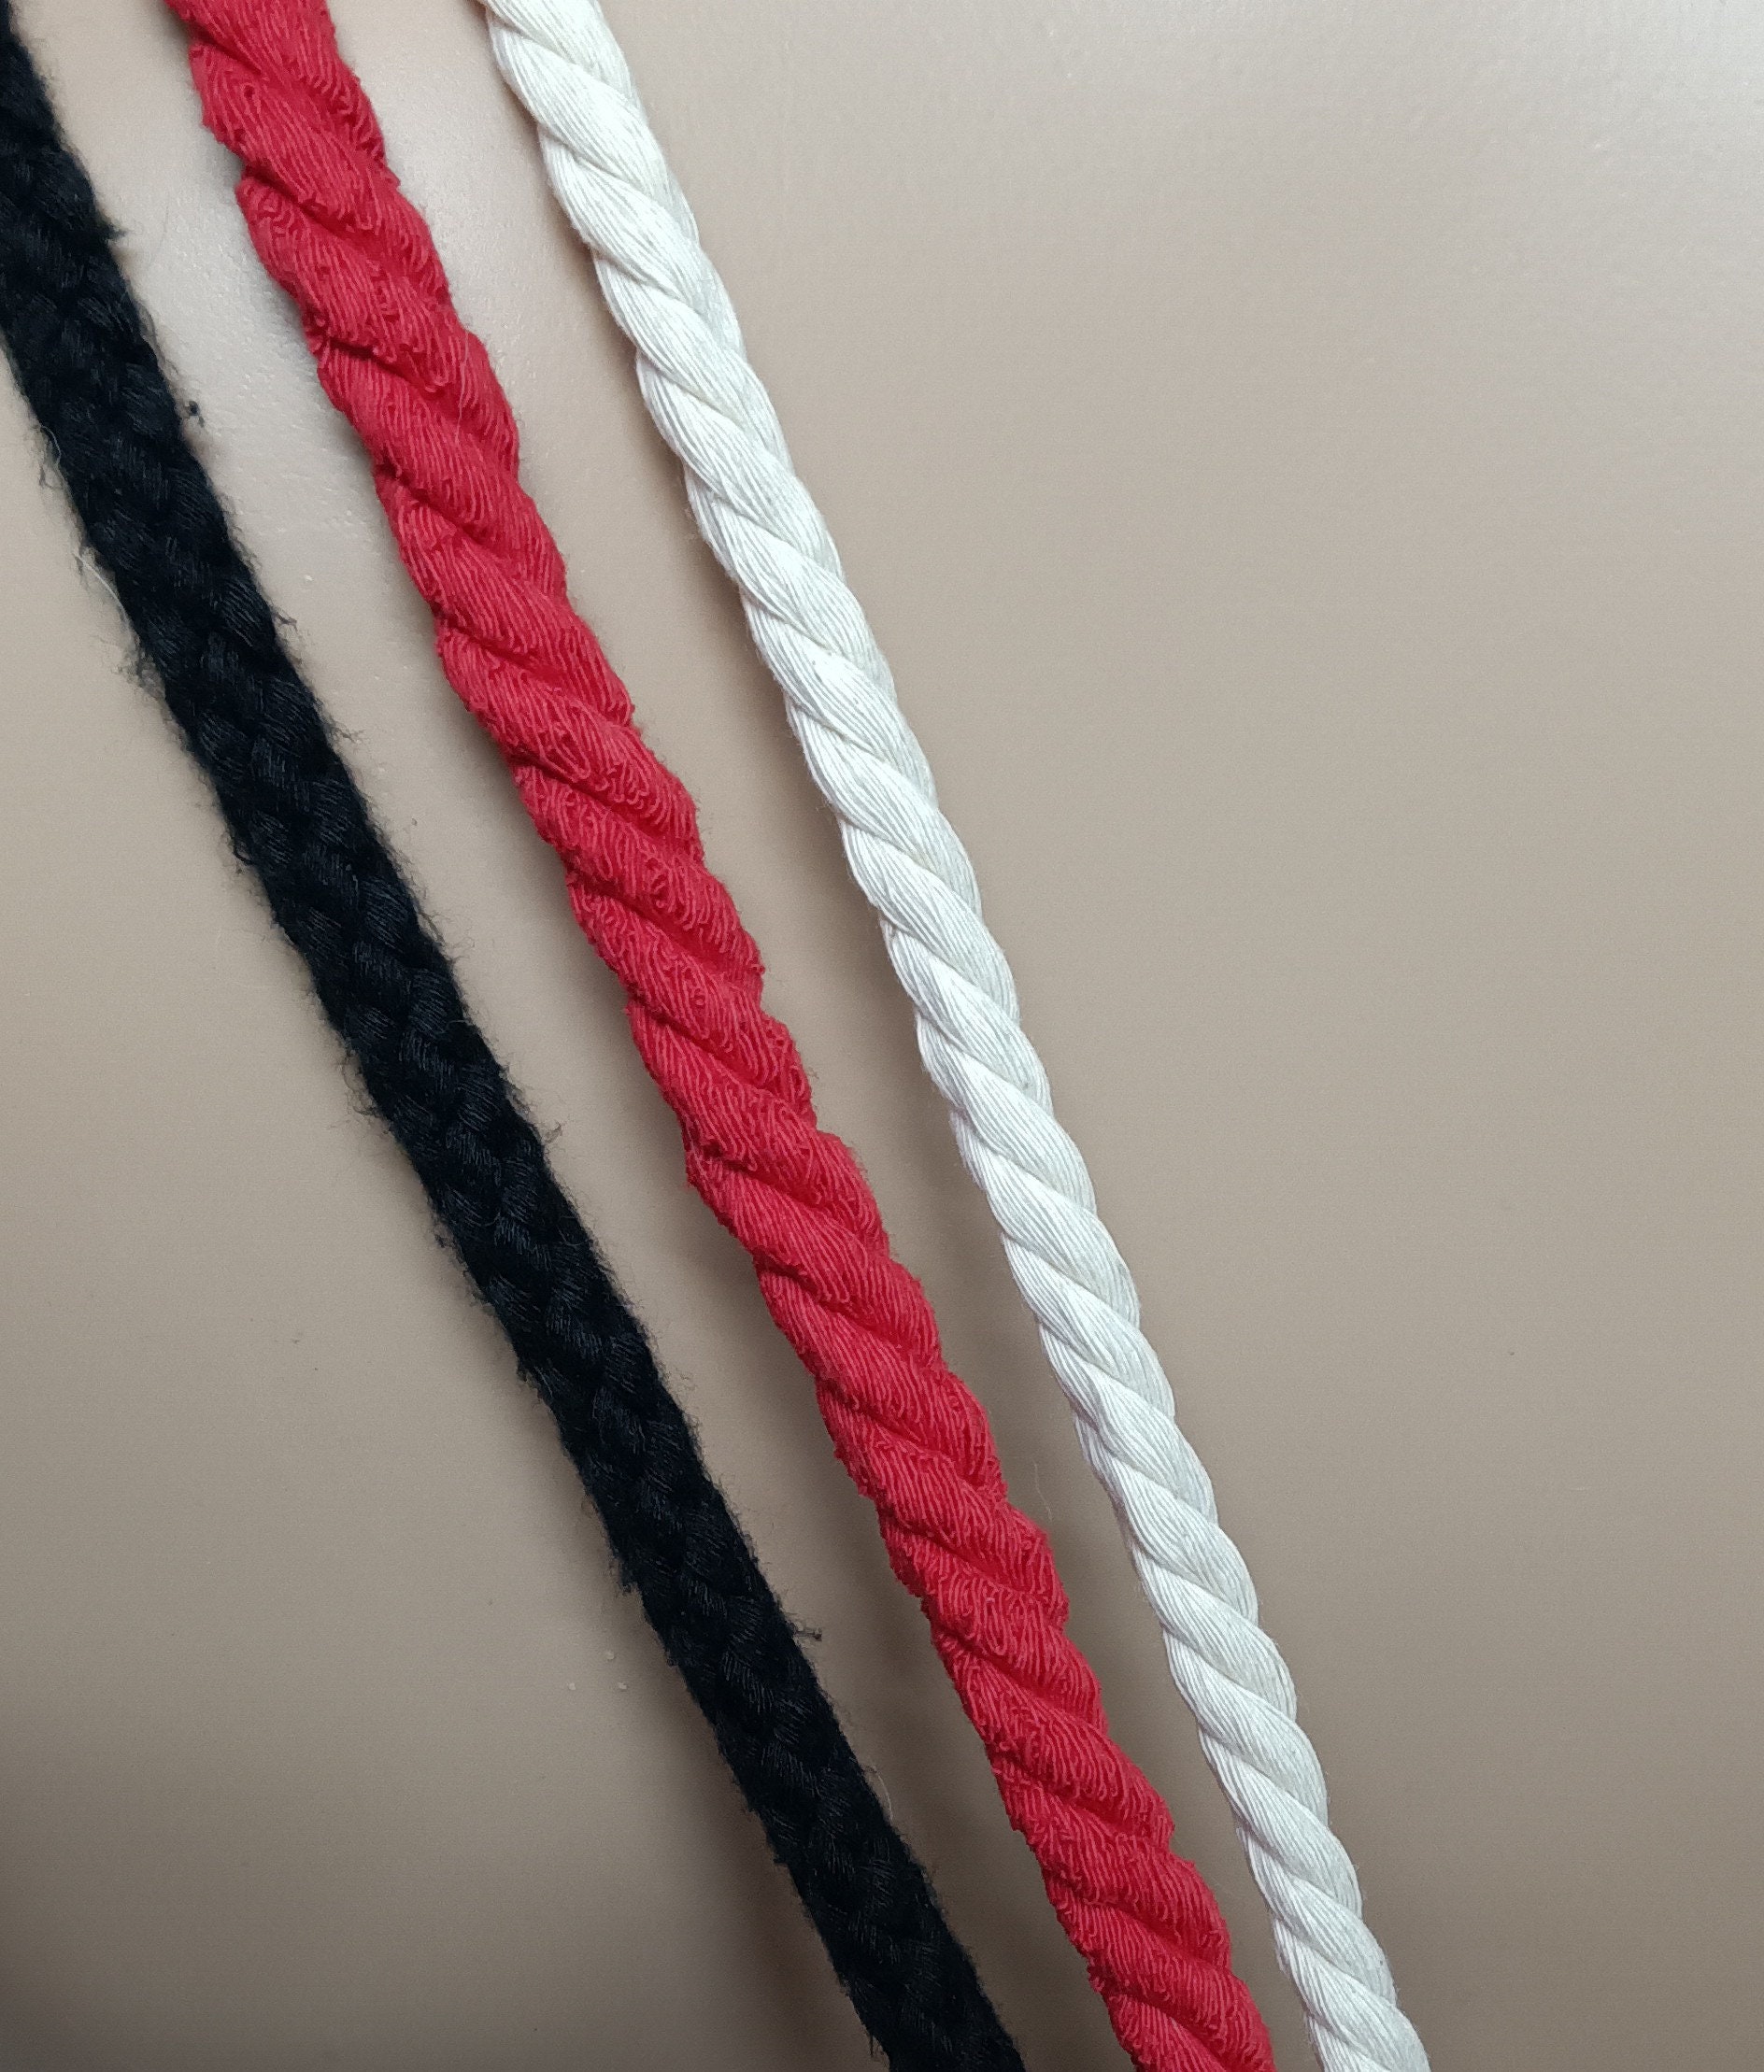 Dyed Shibari Rope 